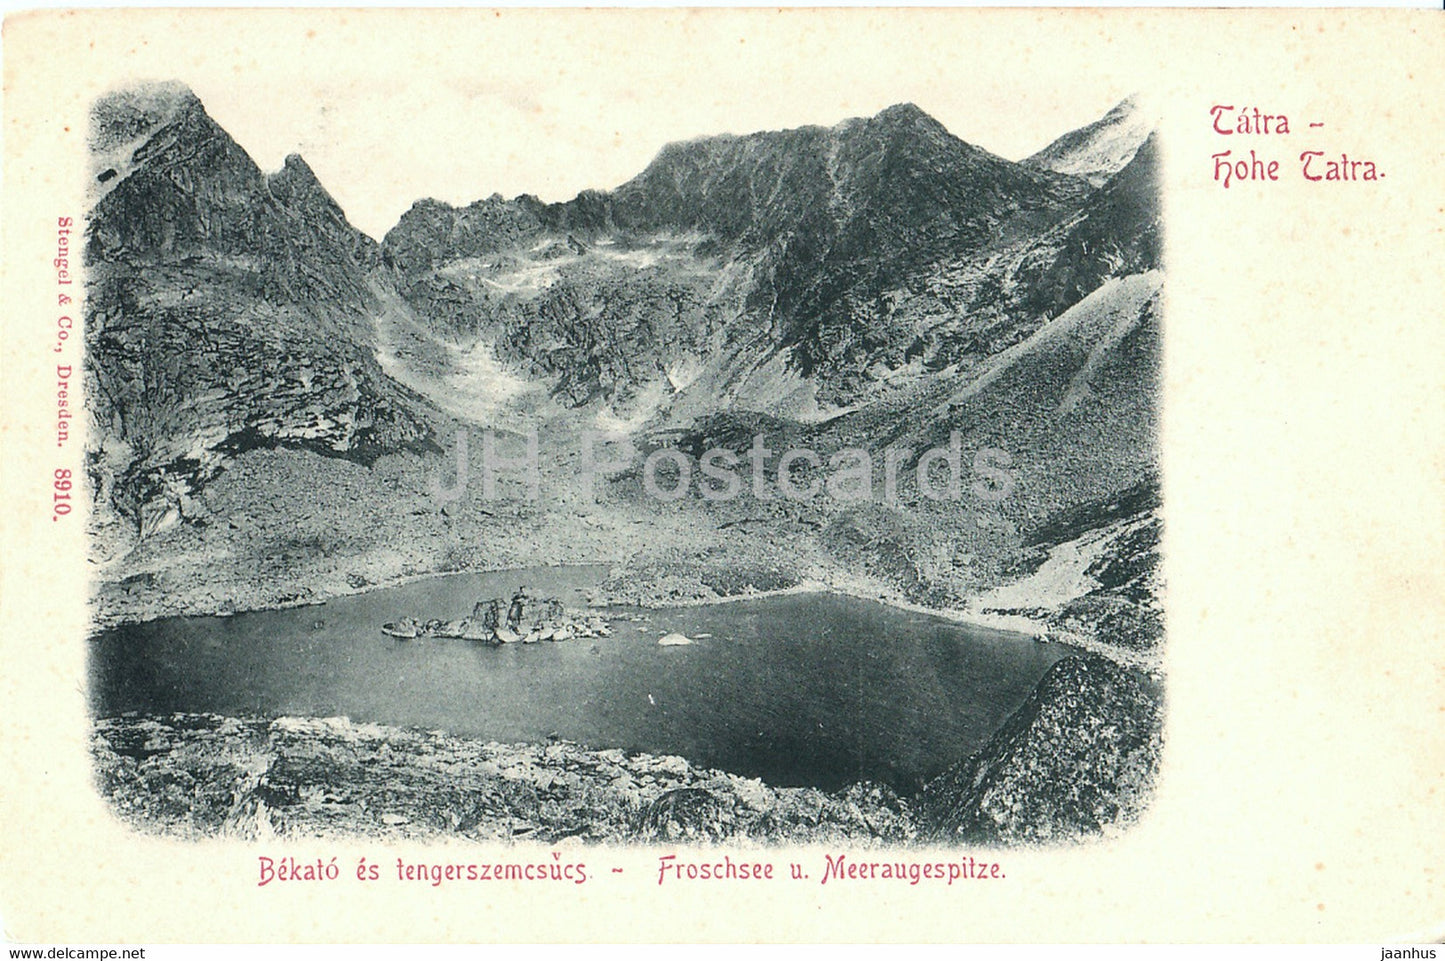 Tatra - Hohe Tatra - Bekato es tengerszemcsucs - Froschsee u Meeraugespitze - 8910 - old postcard - Slovakia - unused - JH Postcards